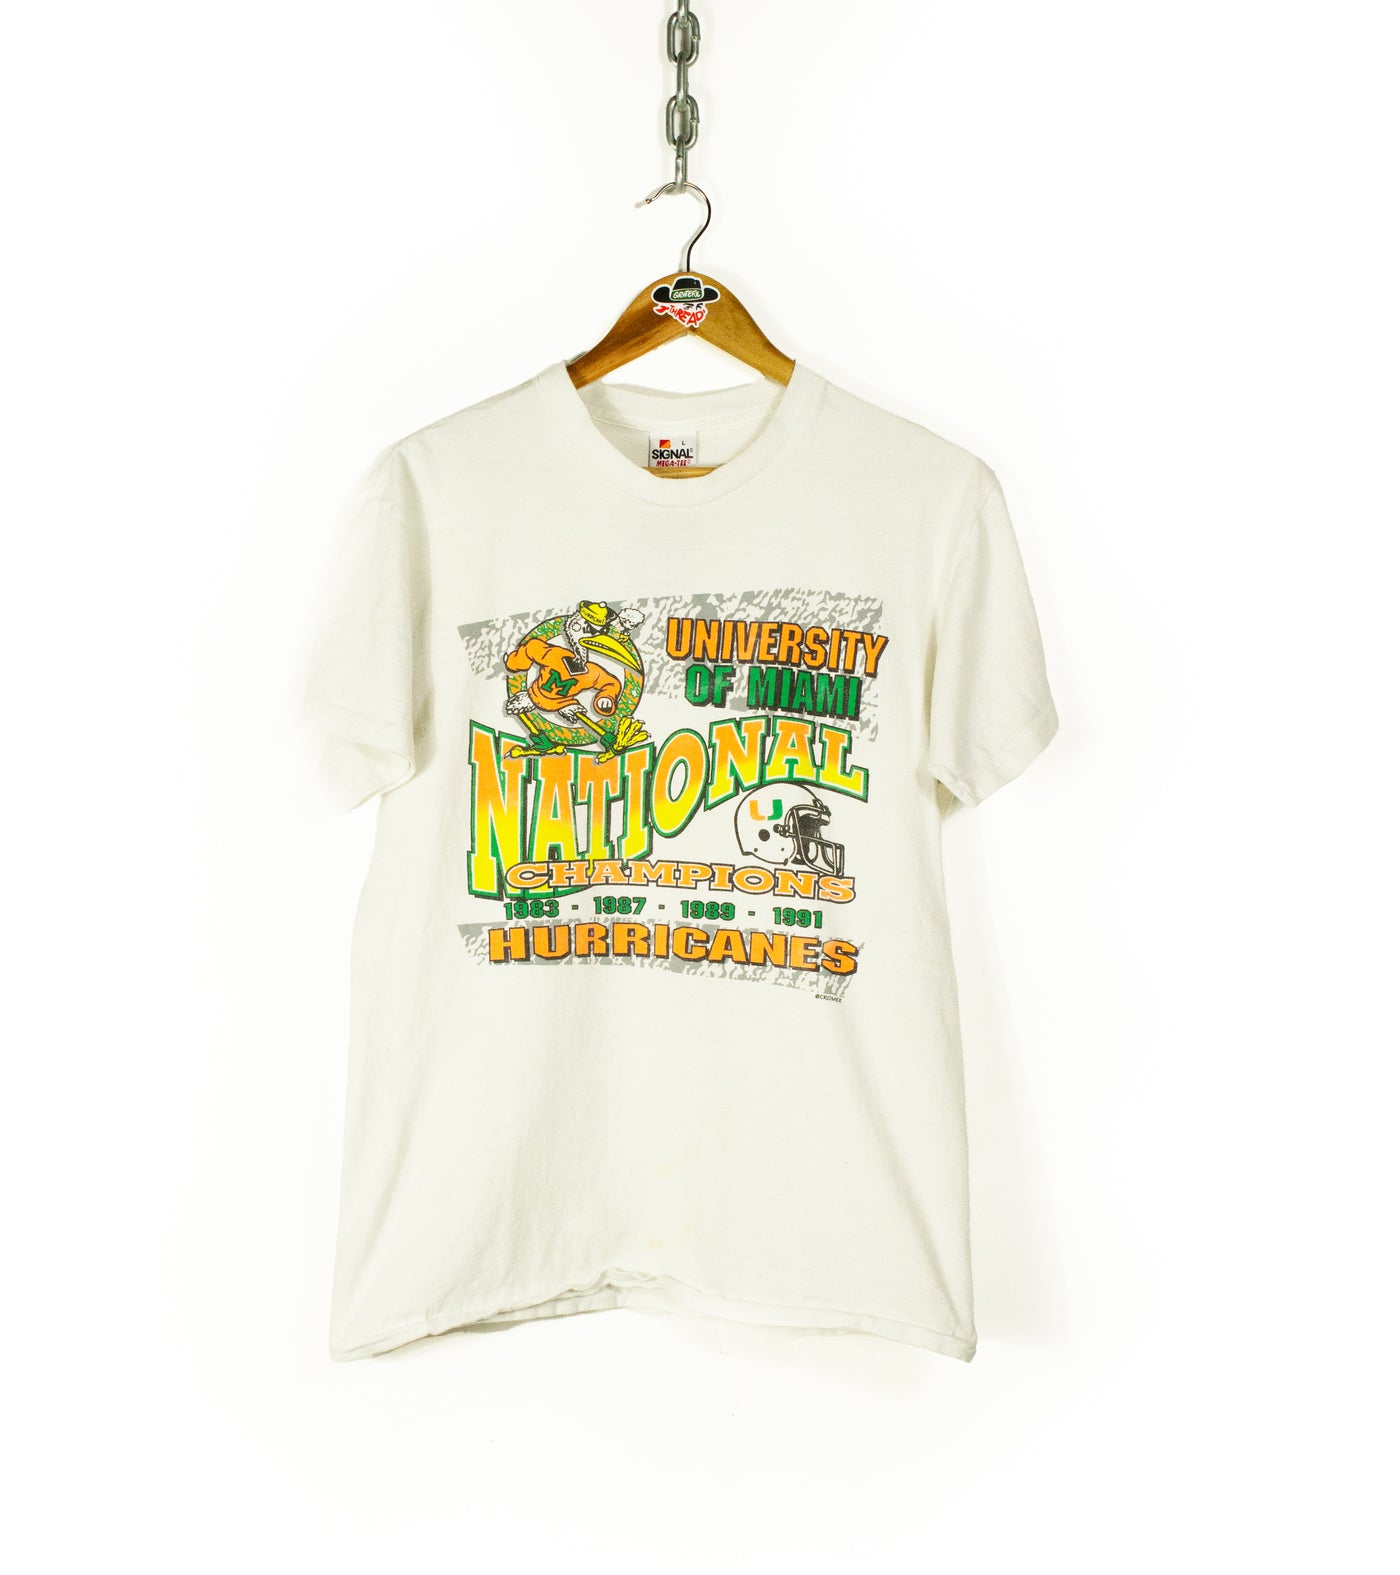 Vintage 1991 Miami Hurricanes Football Championship T-Shirt